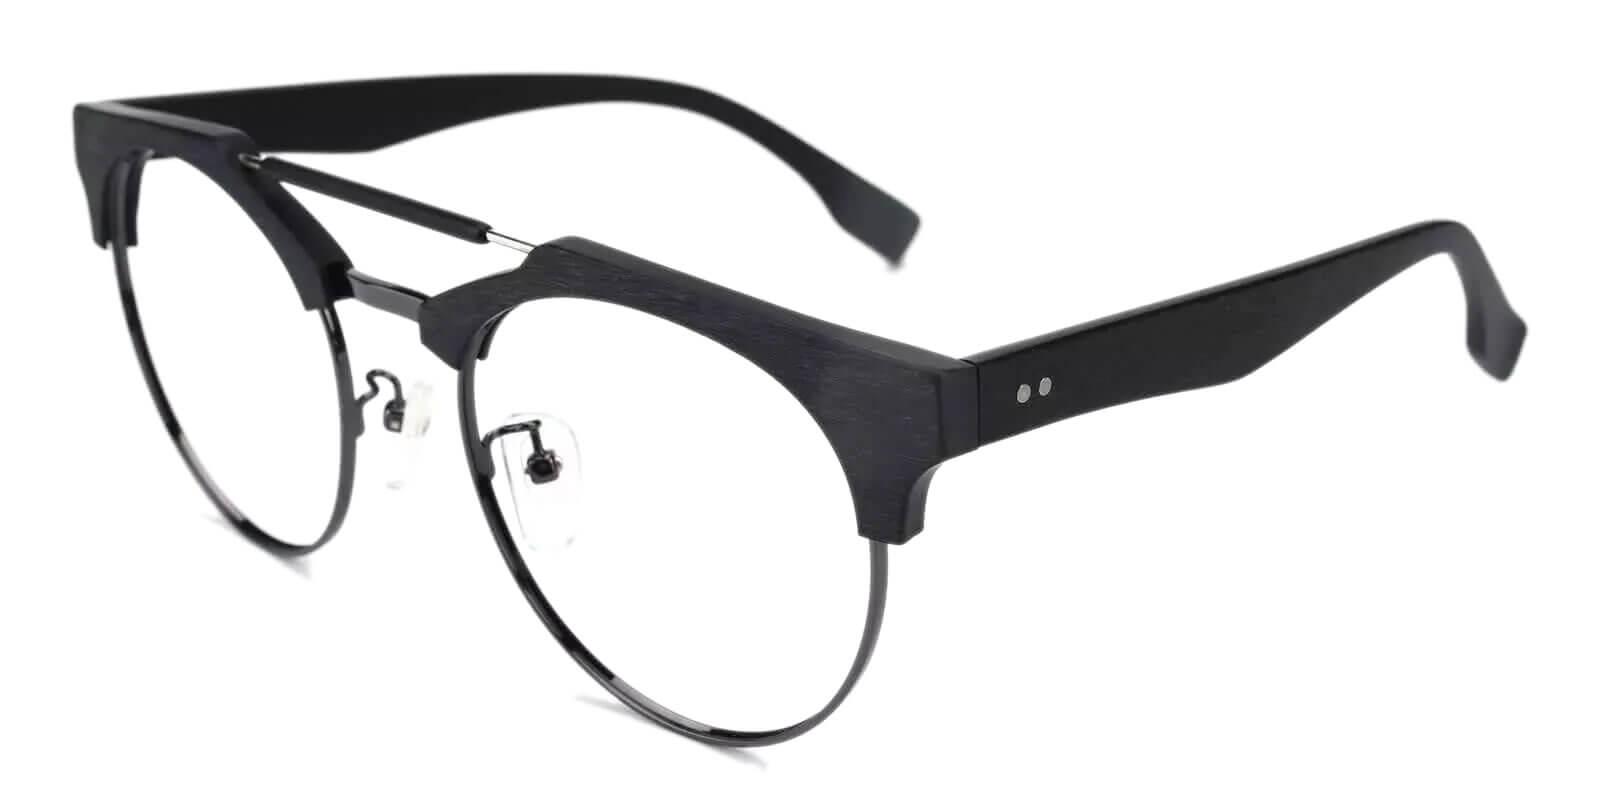 Orbisonia Black Combination Eyeglasses , NosePads Frames from ABBE Glasses